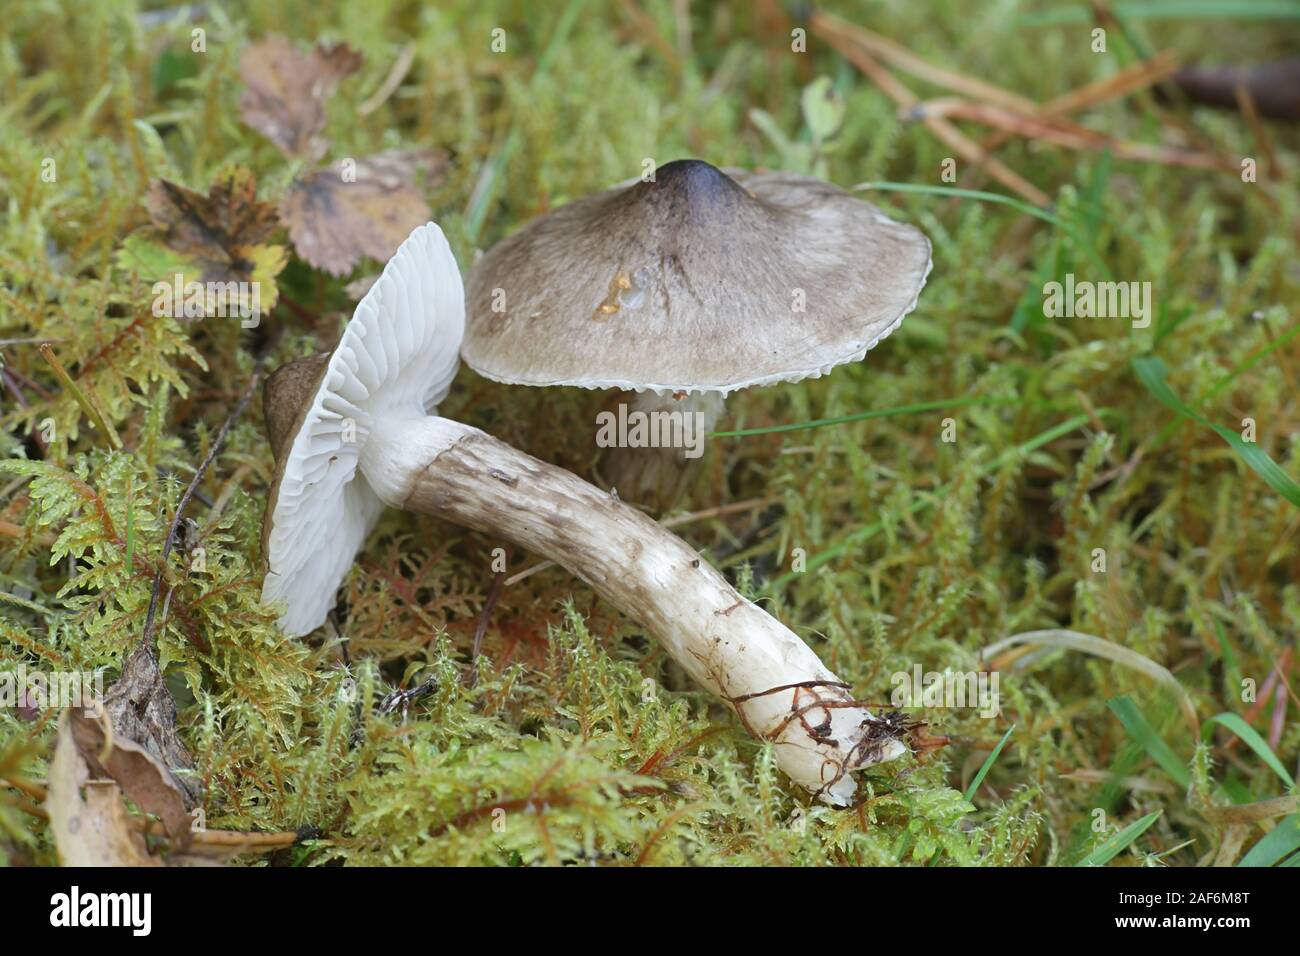 Hygrophorus korhonenii, woodwax or waxy cap mushrooms from Finland Stock Photo